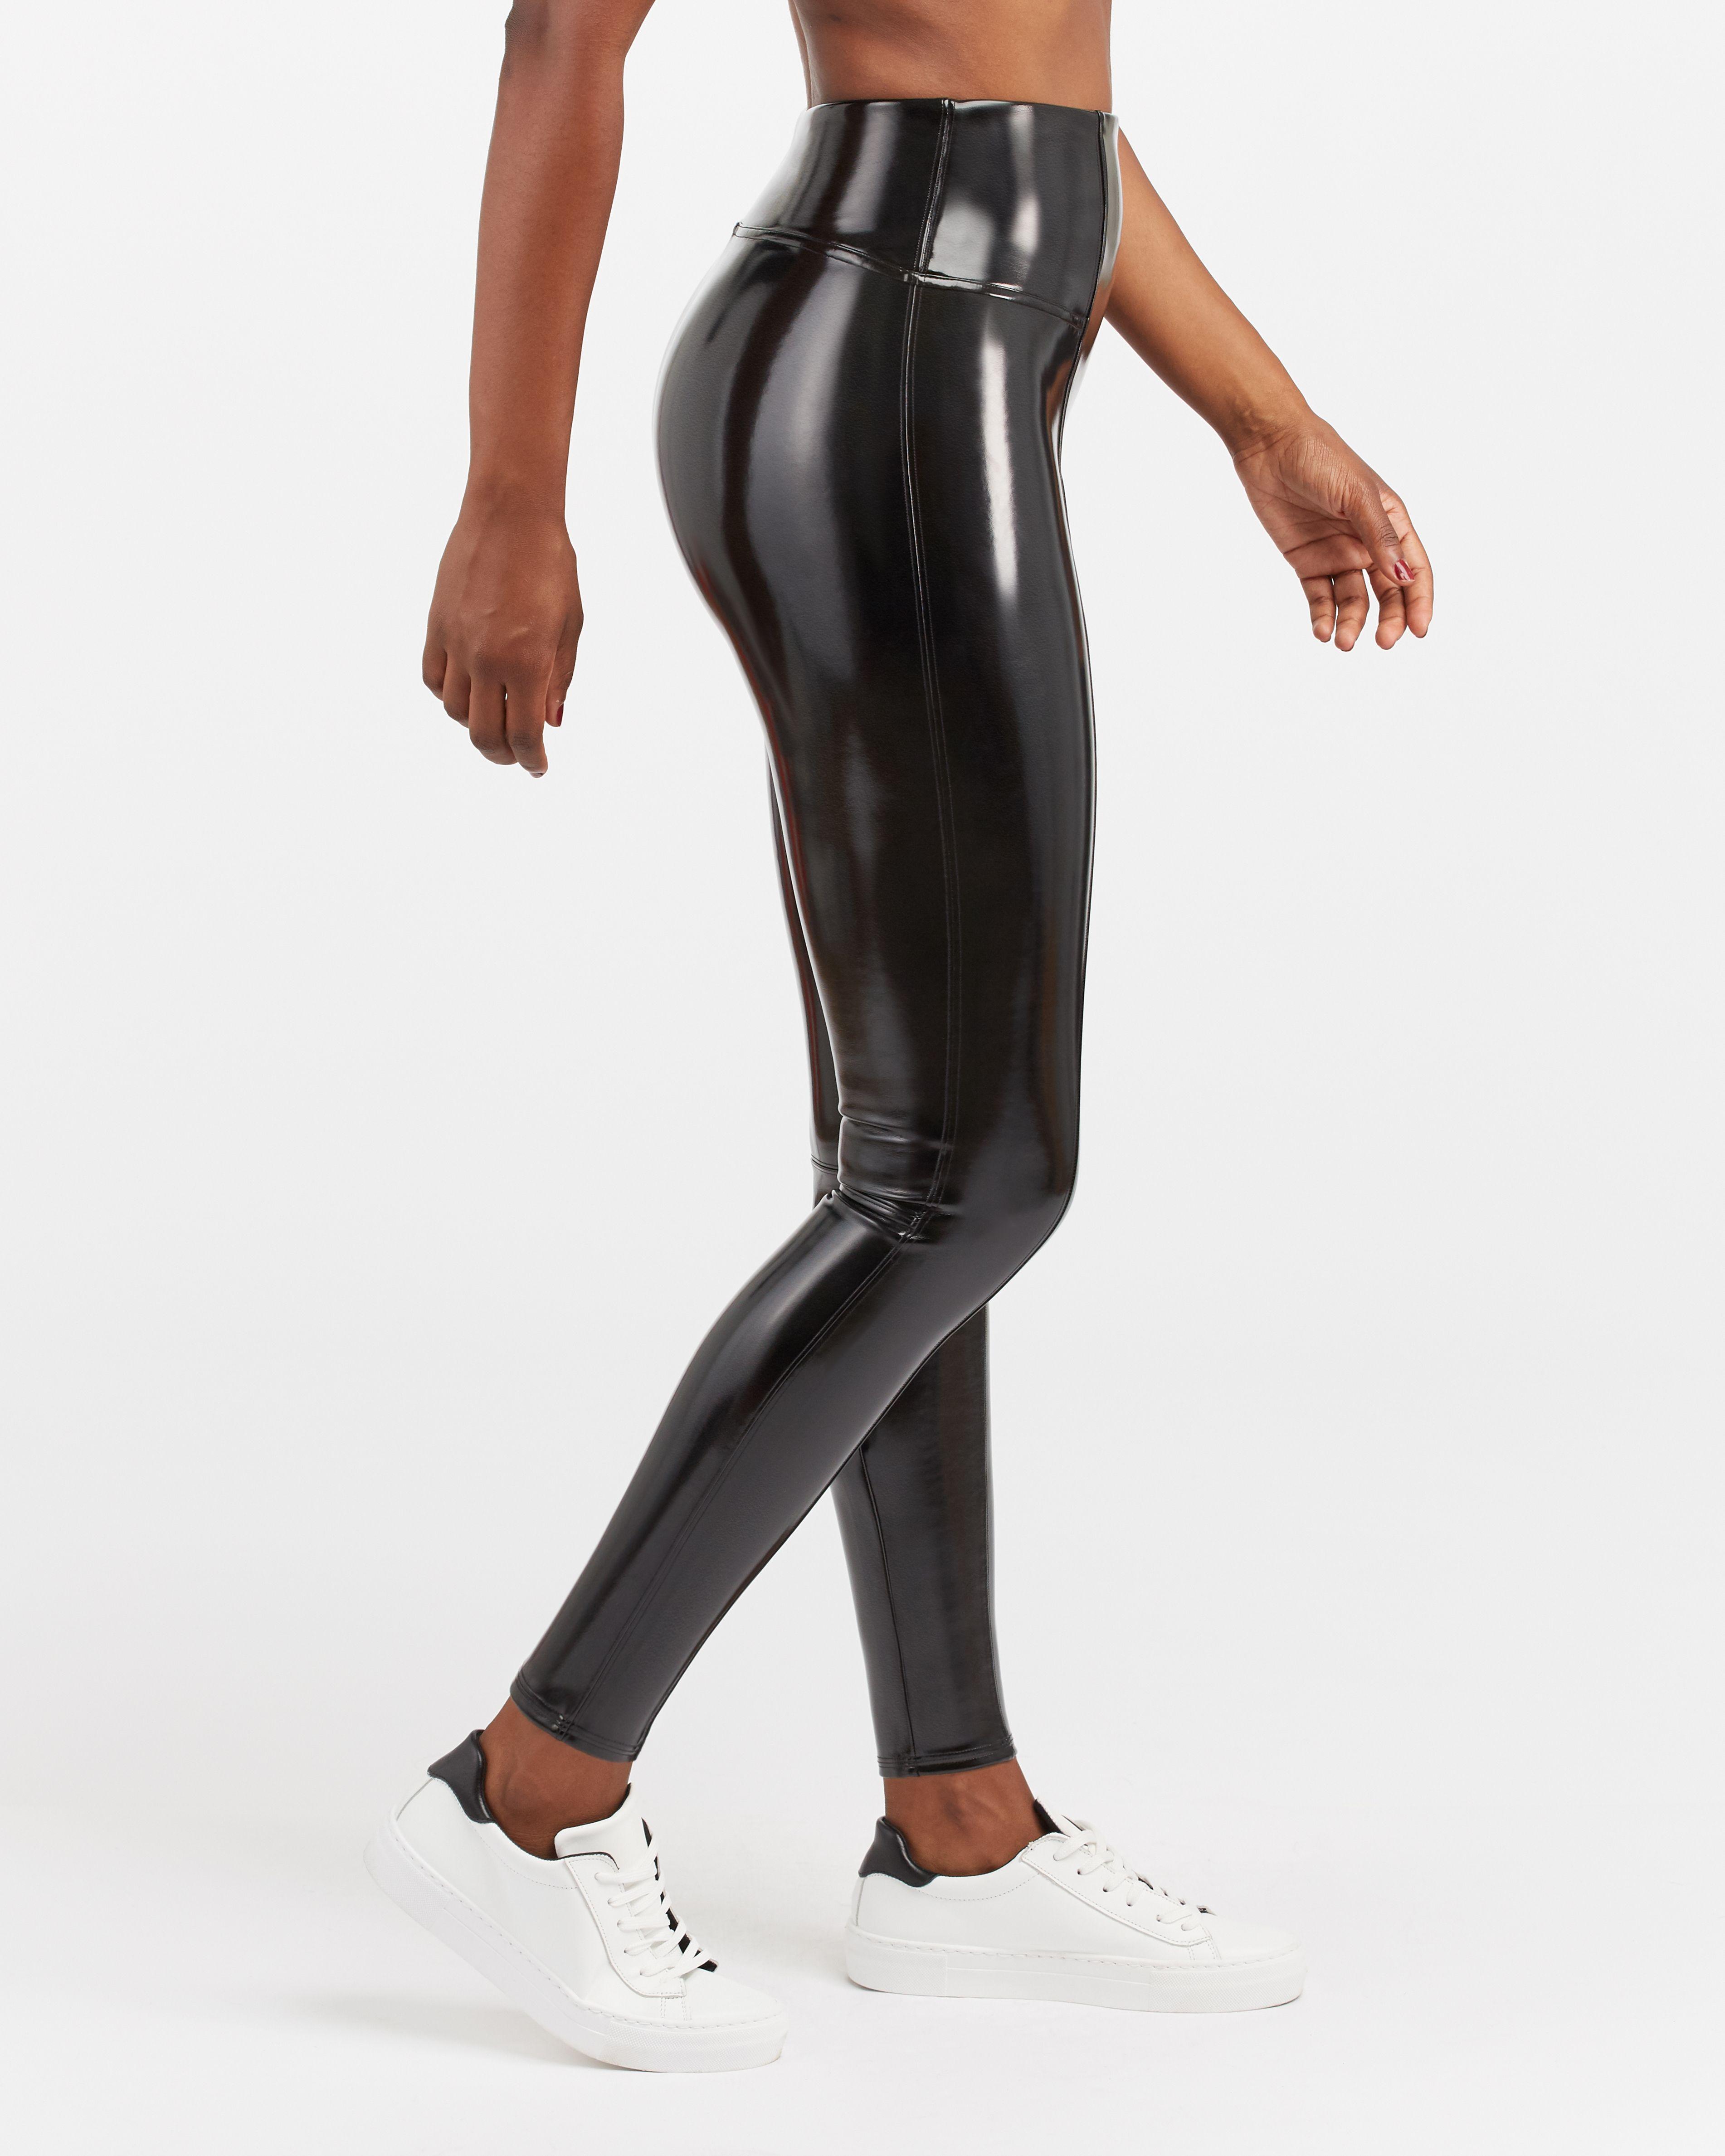 patent leather leggings spanx